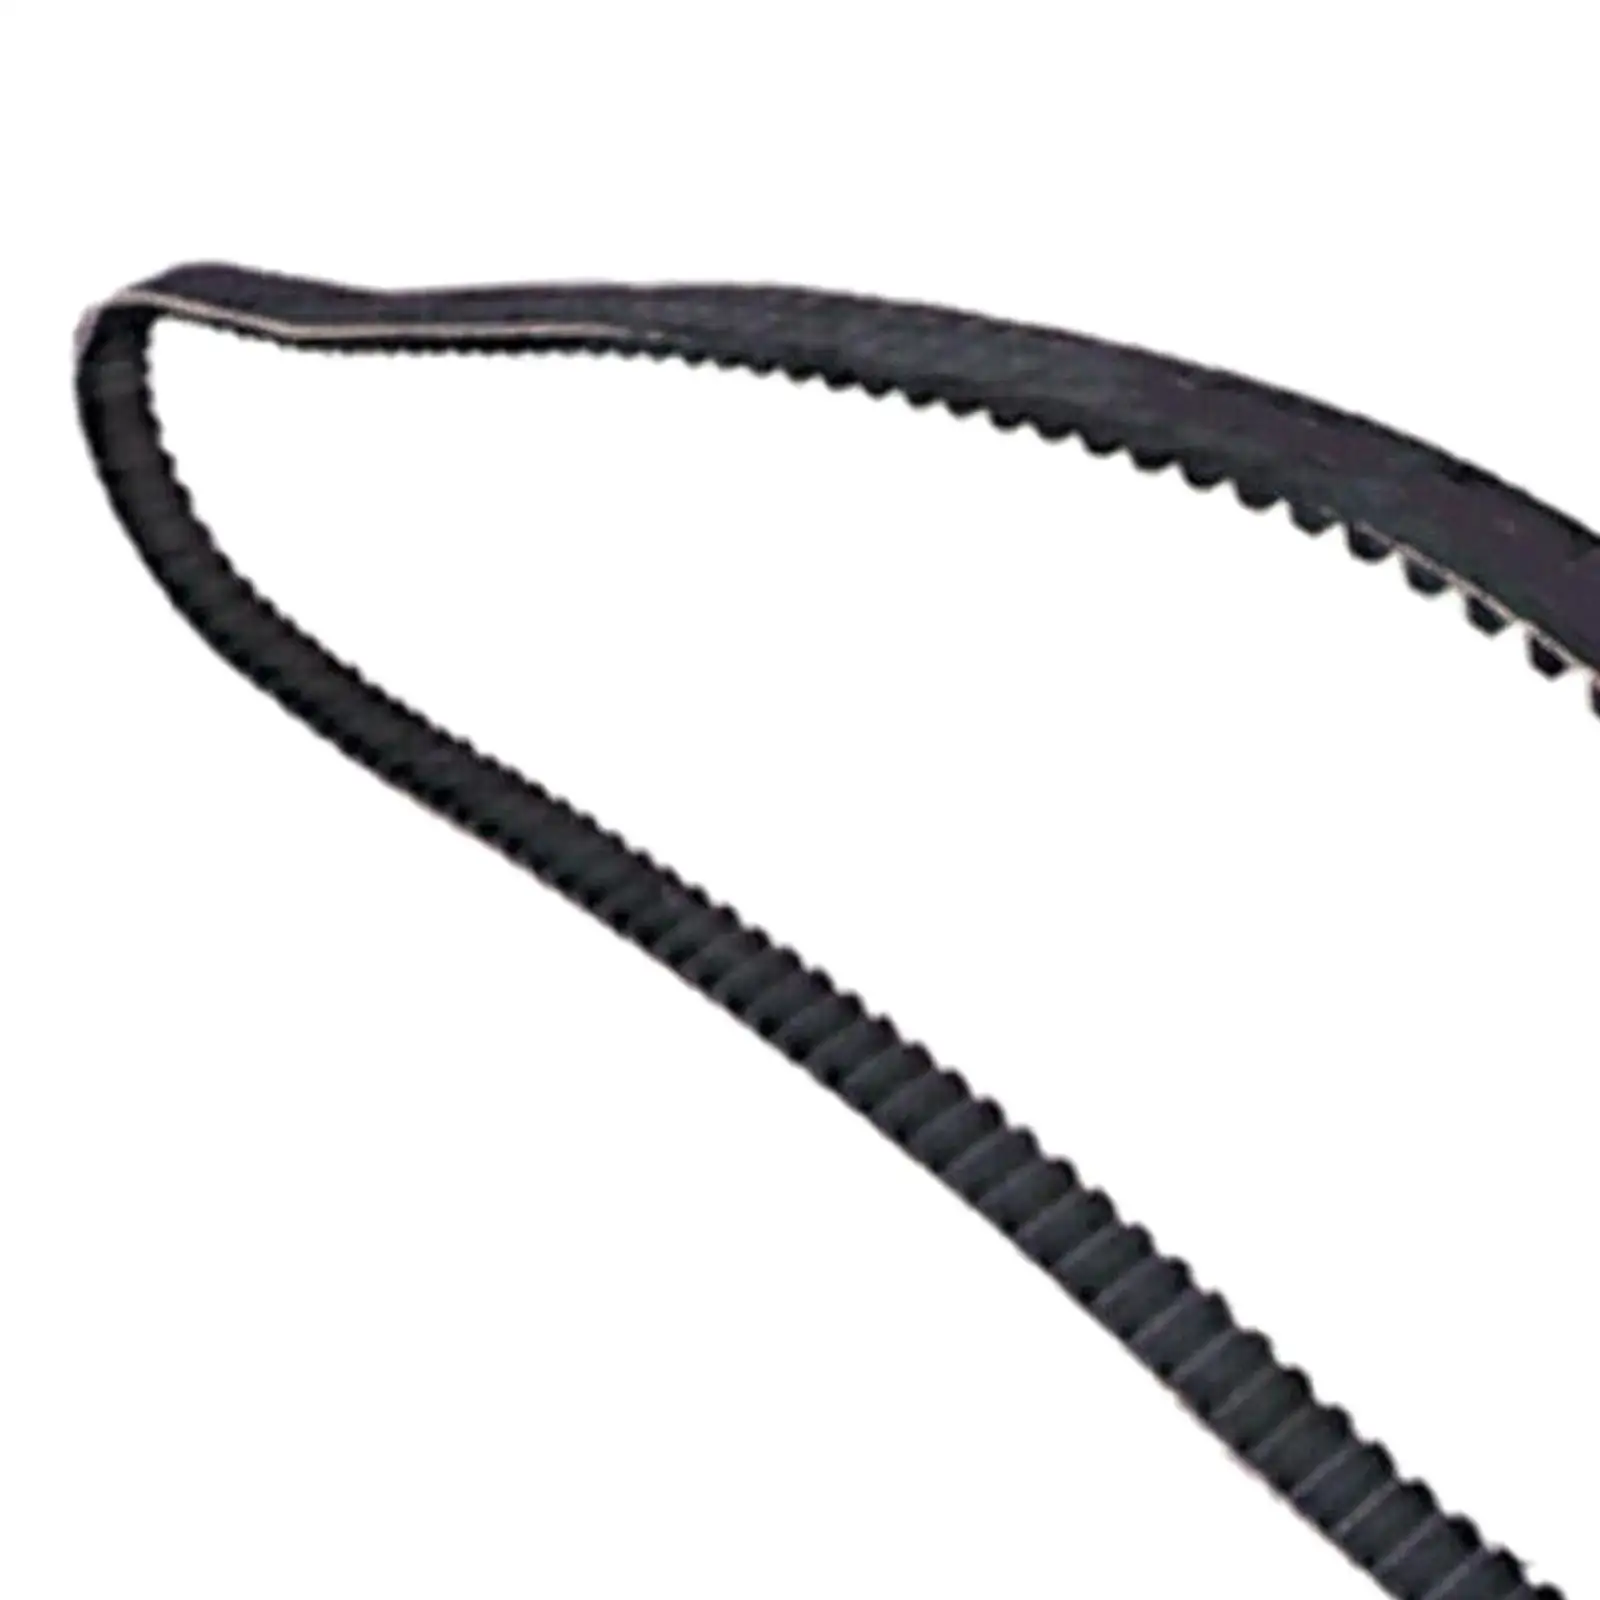 Rear Drive Belt Motorcycle Accessories Rubber 133T 1 1/8